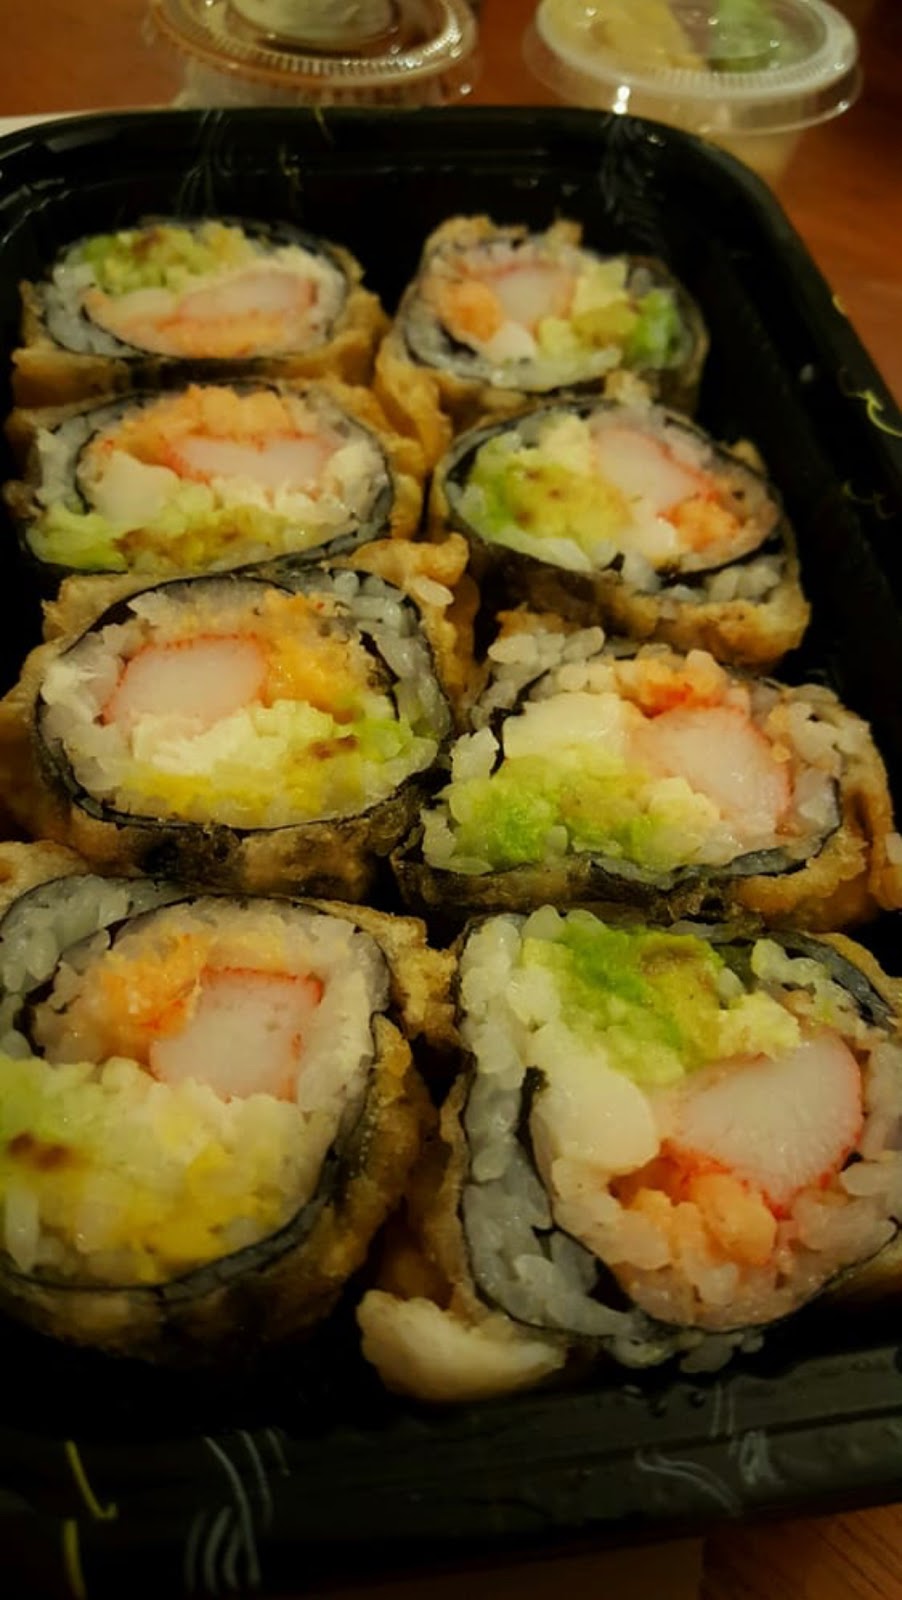 Aja Sushi Asian Fusion Restaurant | 2464 Jerusalem Ave, North Bellmore, NY 11710 | Phone: (516) 308-4405